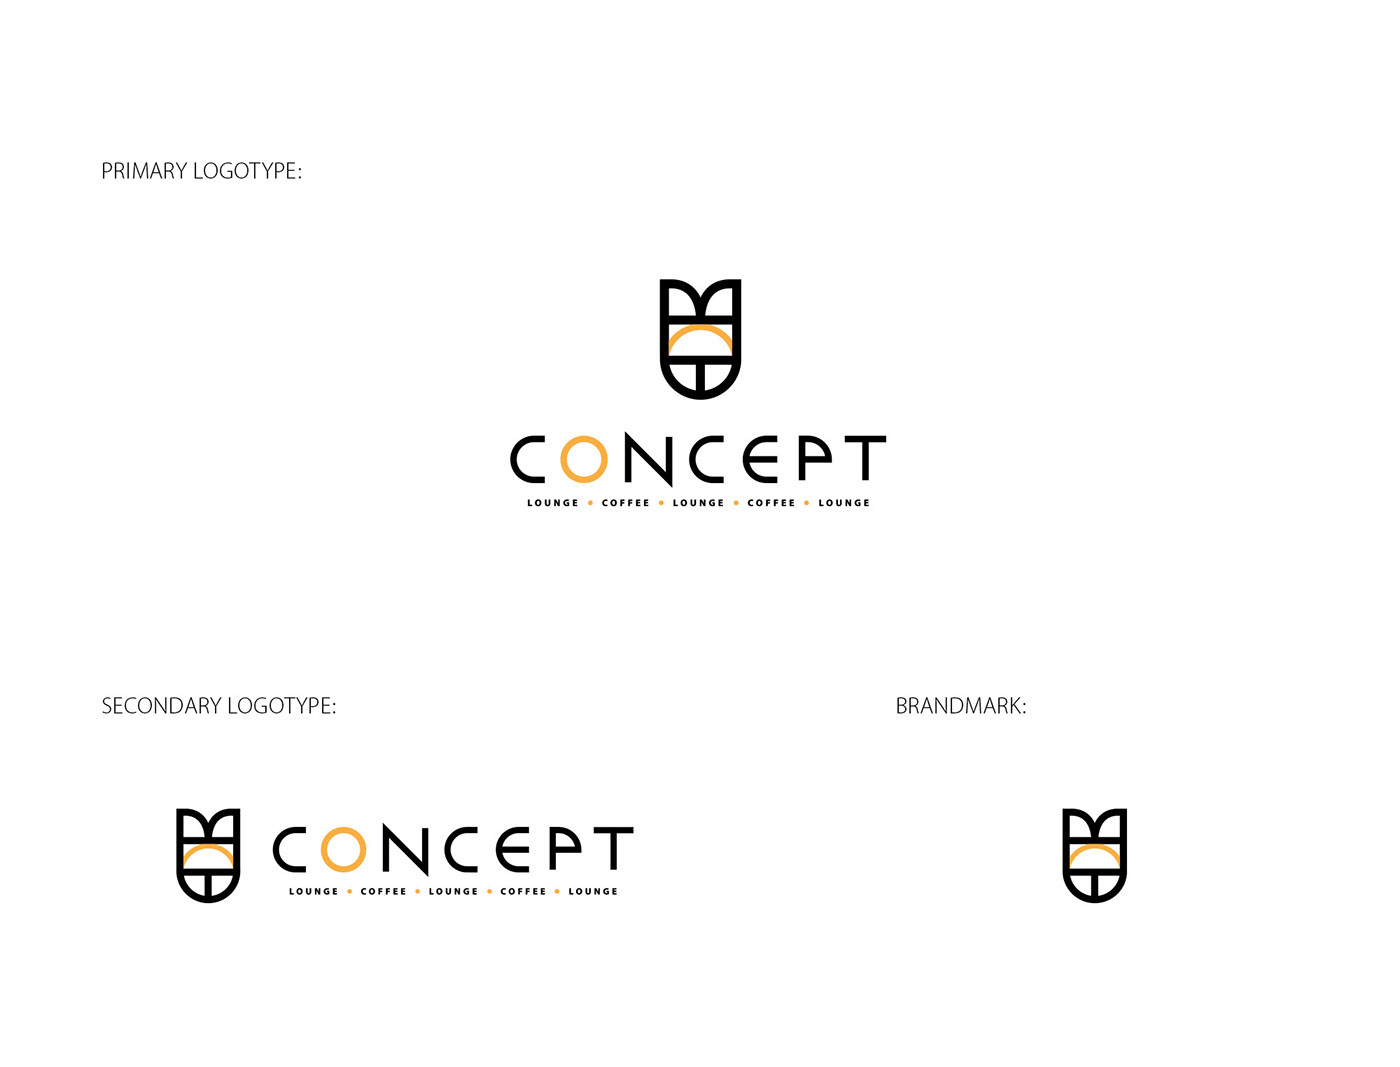 Logo Design flat logo minimal simple branding  Coffee lounge lettering identity stationery design